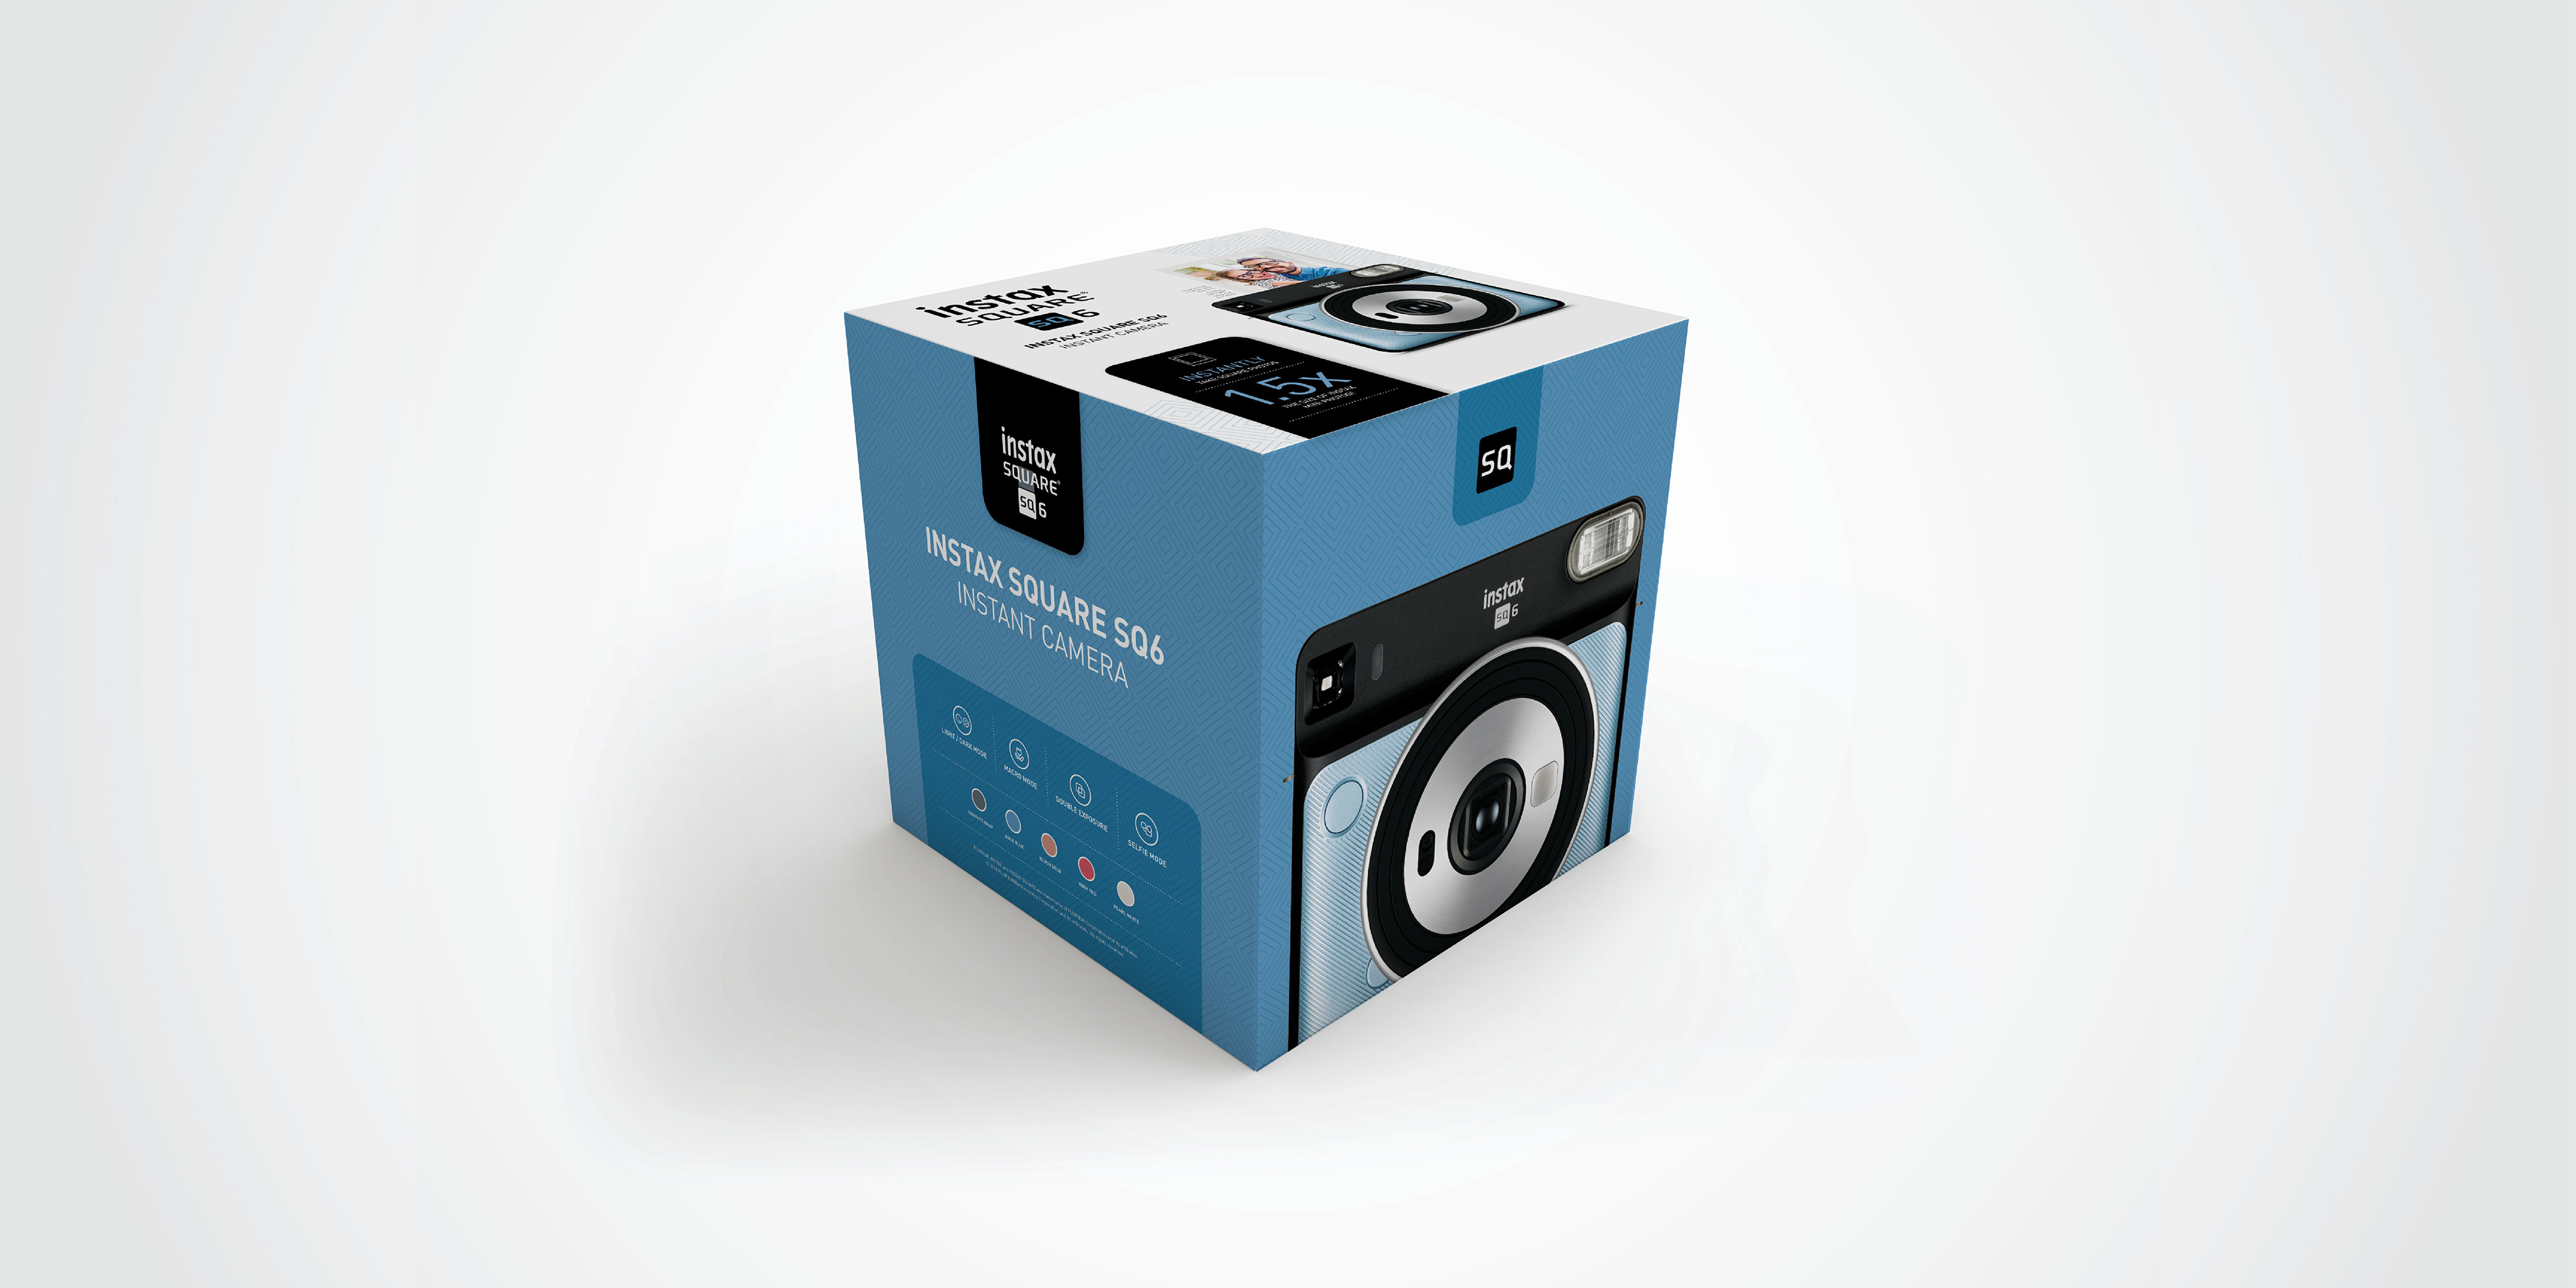 FUJIFILM INSTAX SQUARE SQ6 Fuji Instant Film Camera - Aqua Blue - New